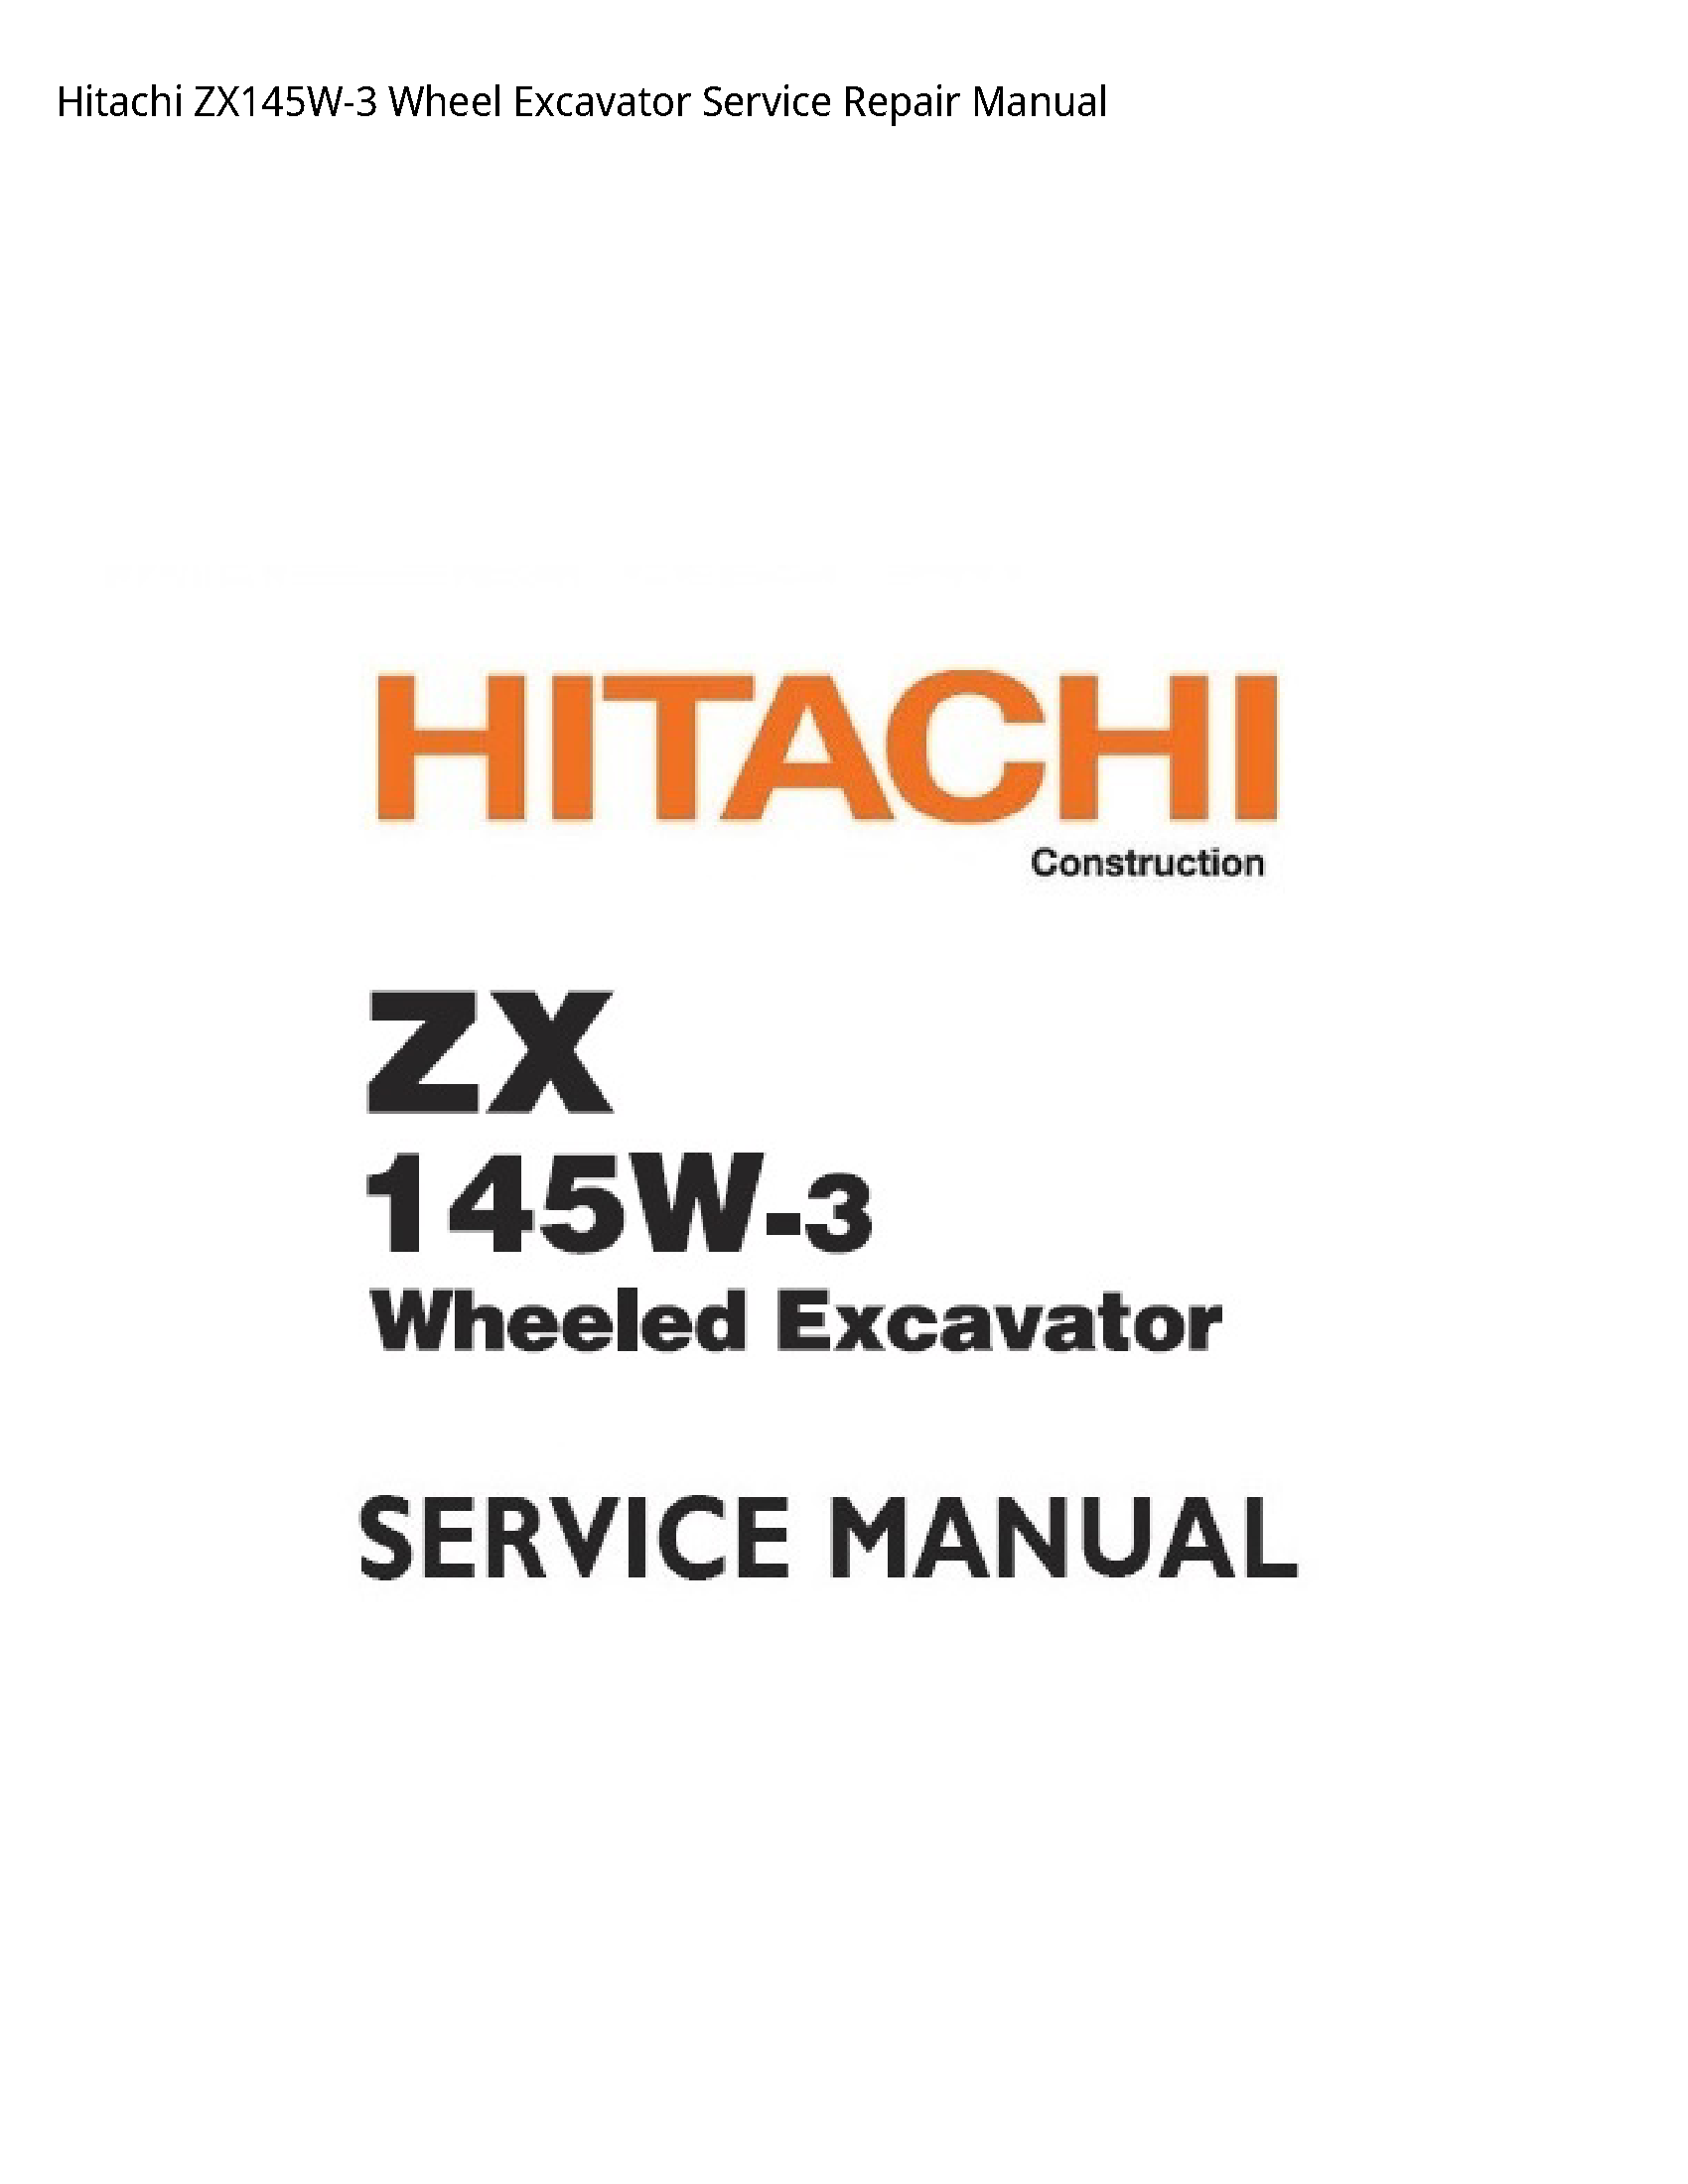 Hitachi ZX145W-3 Wheel Excavator manual